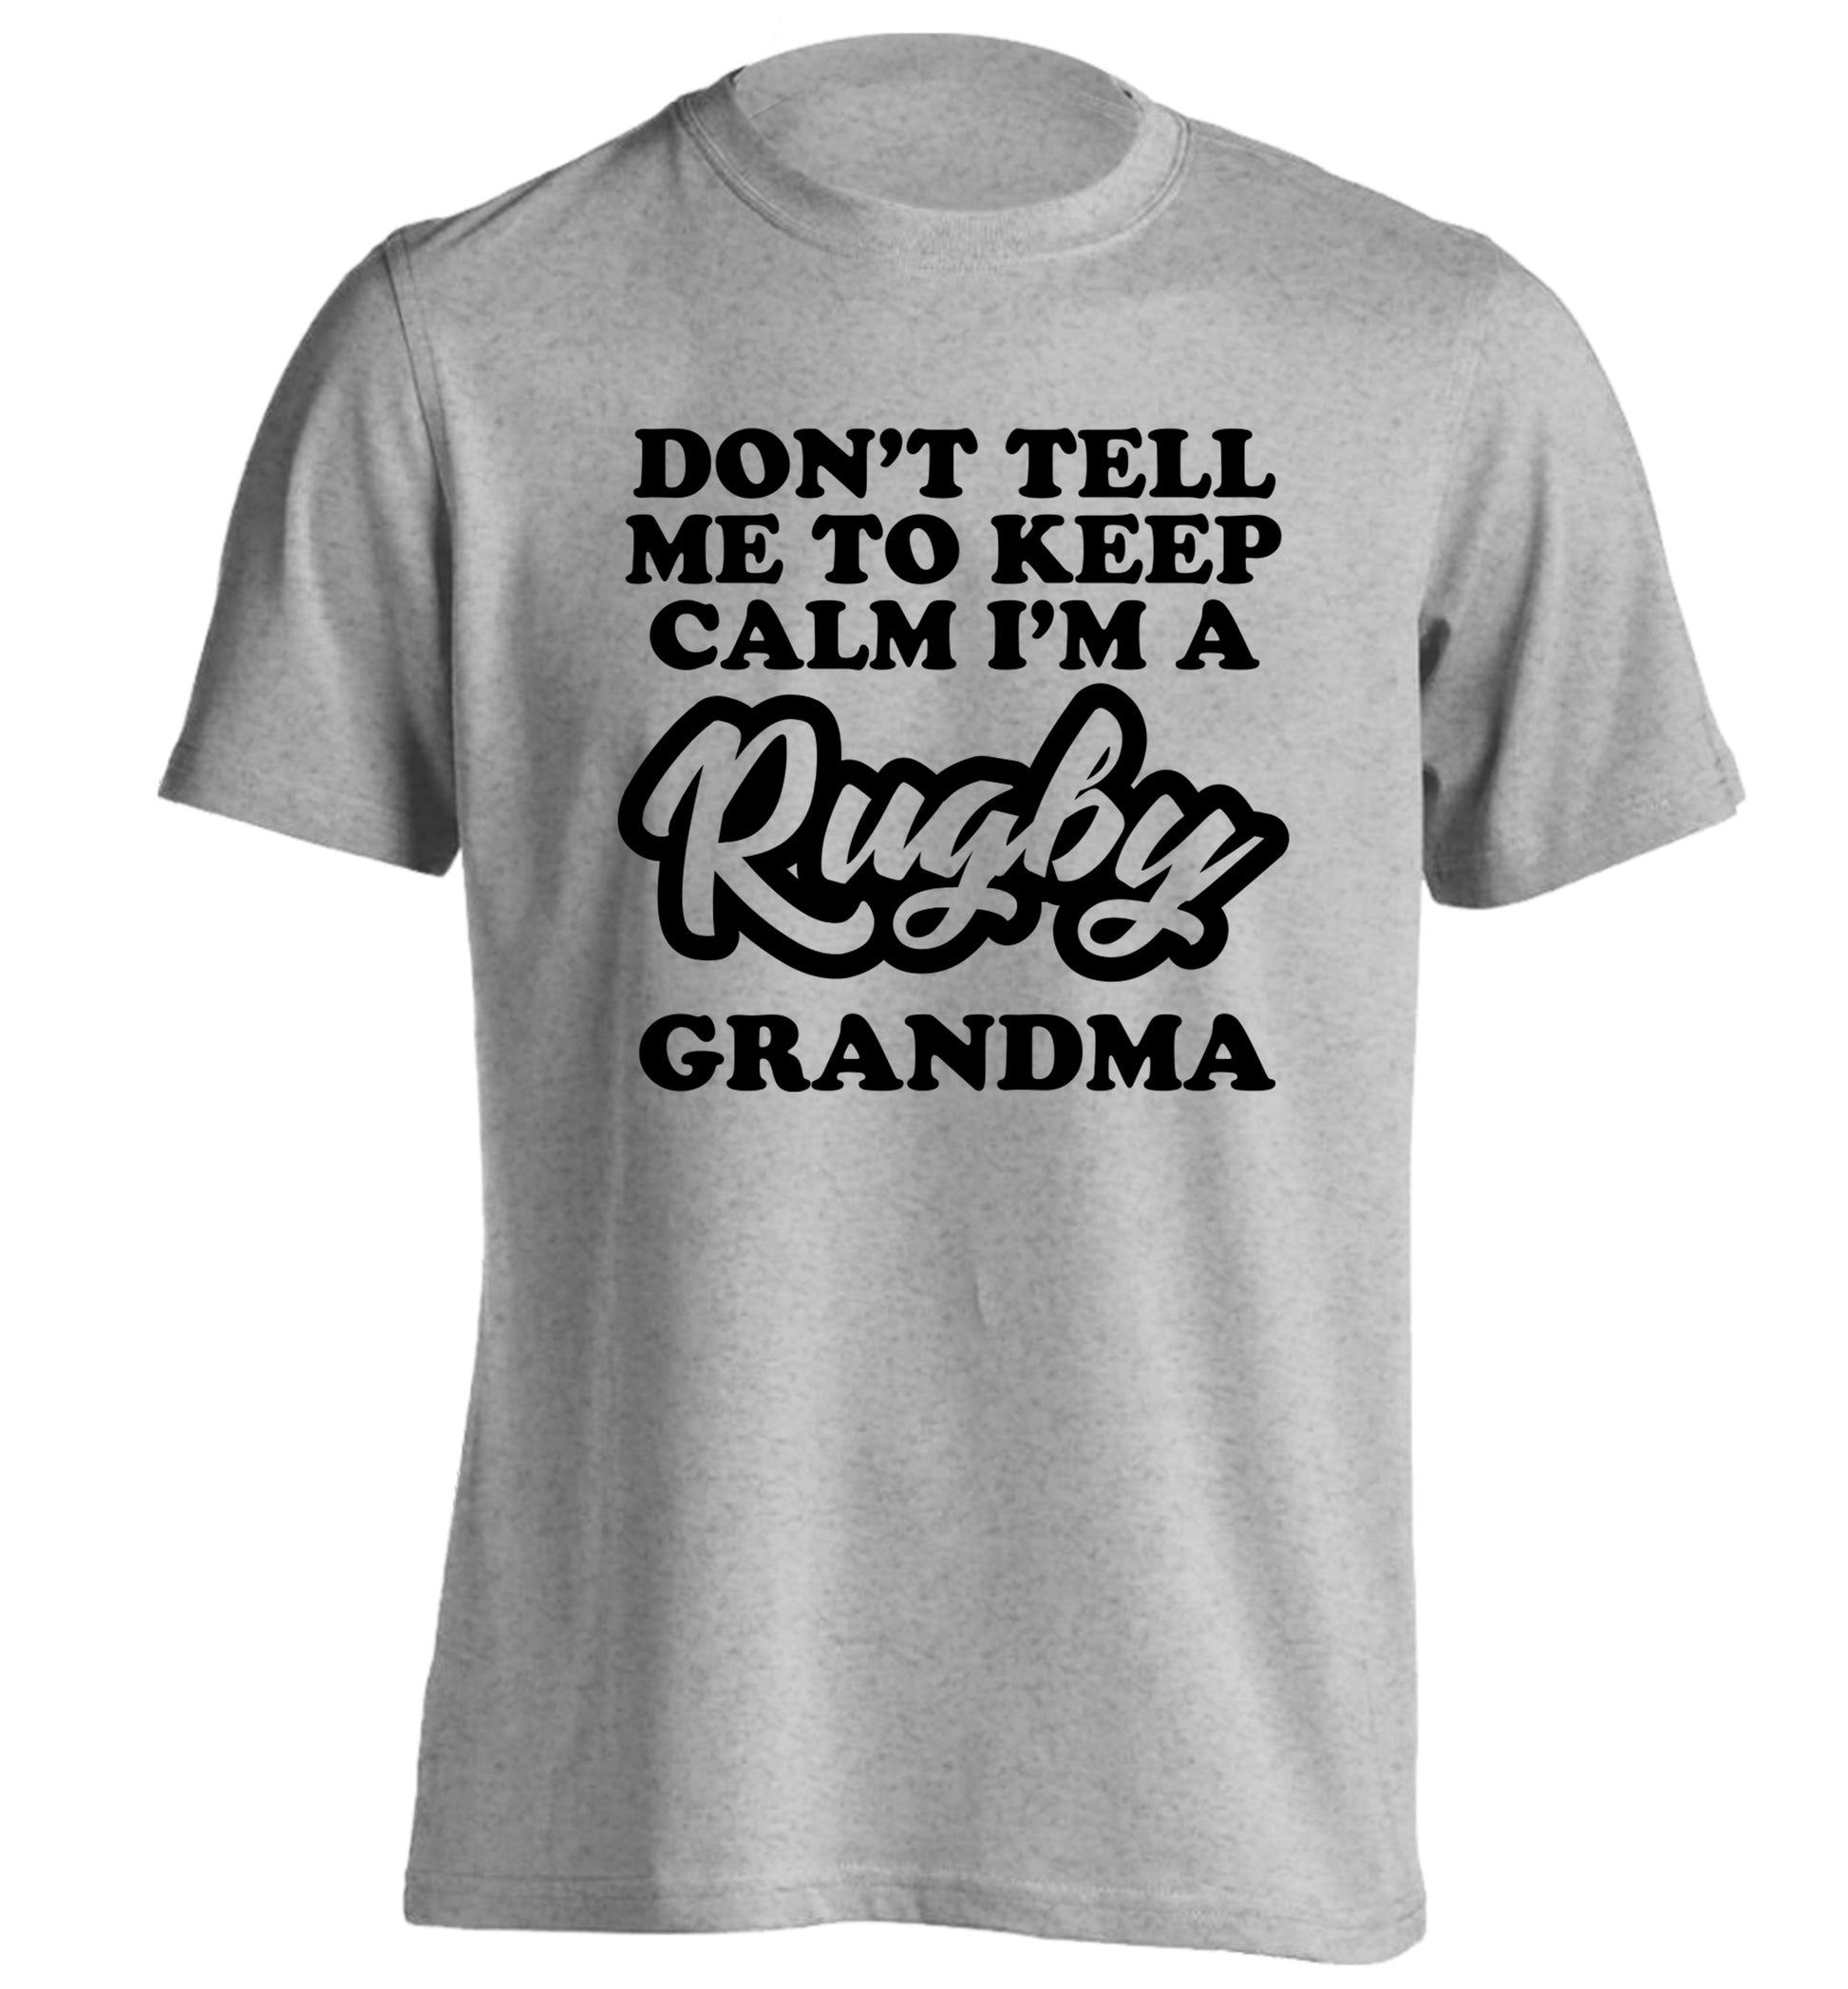 Don't tell me to keep calm I'm a rugby grandma adults unisex grey Tshirt 2XL